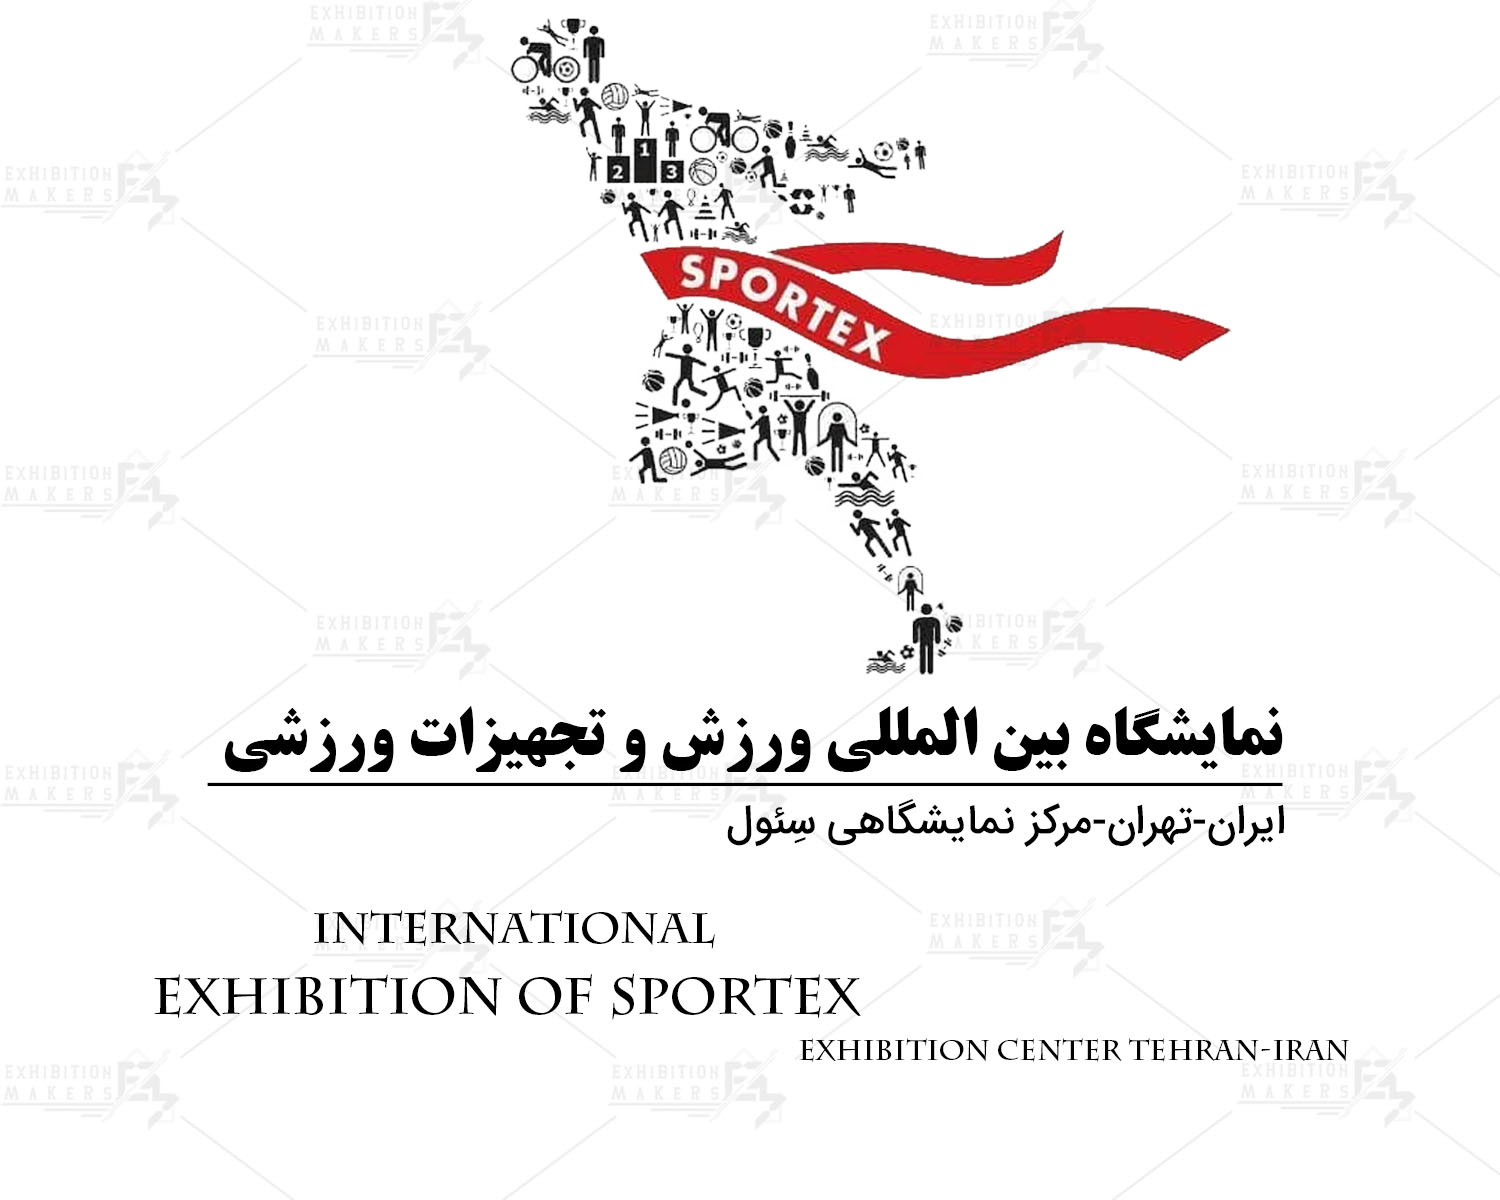 The Tehran International Exhibition of Sportex